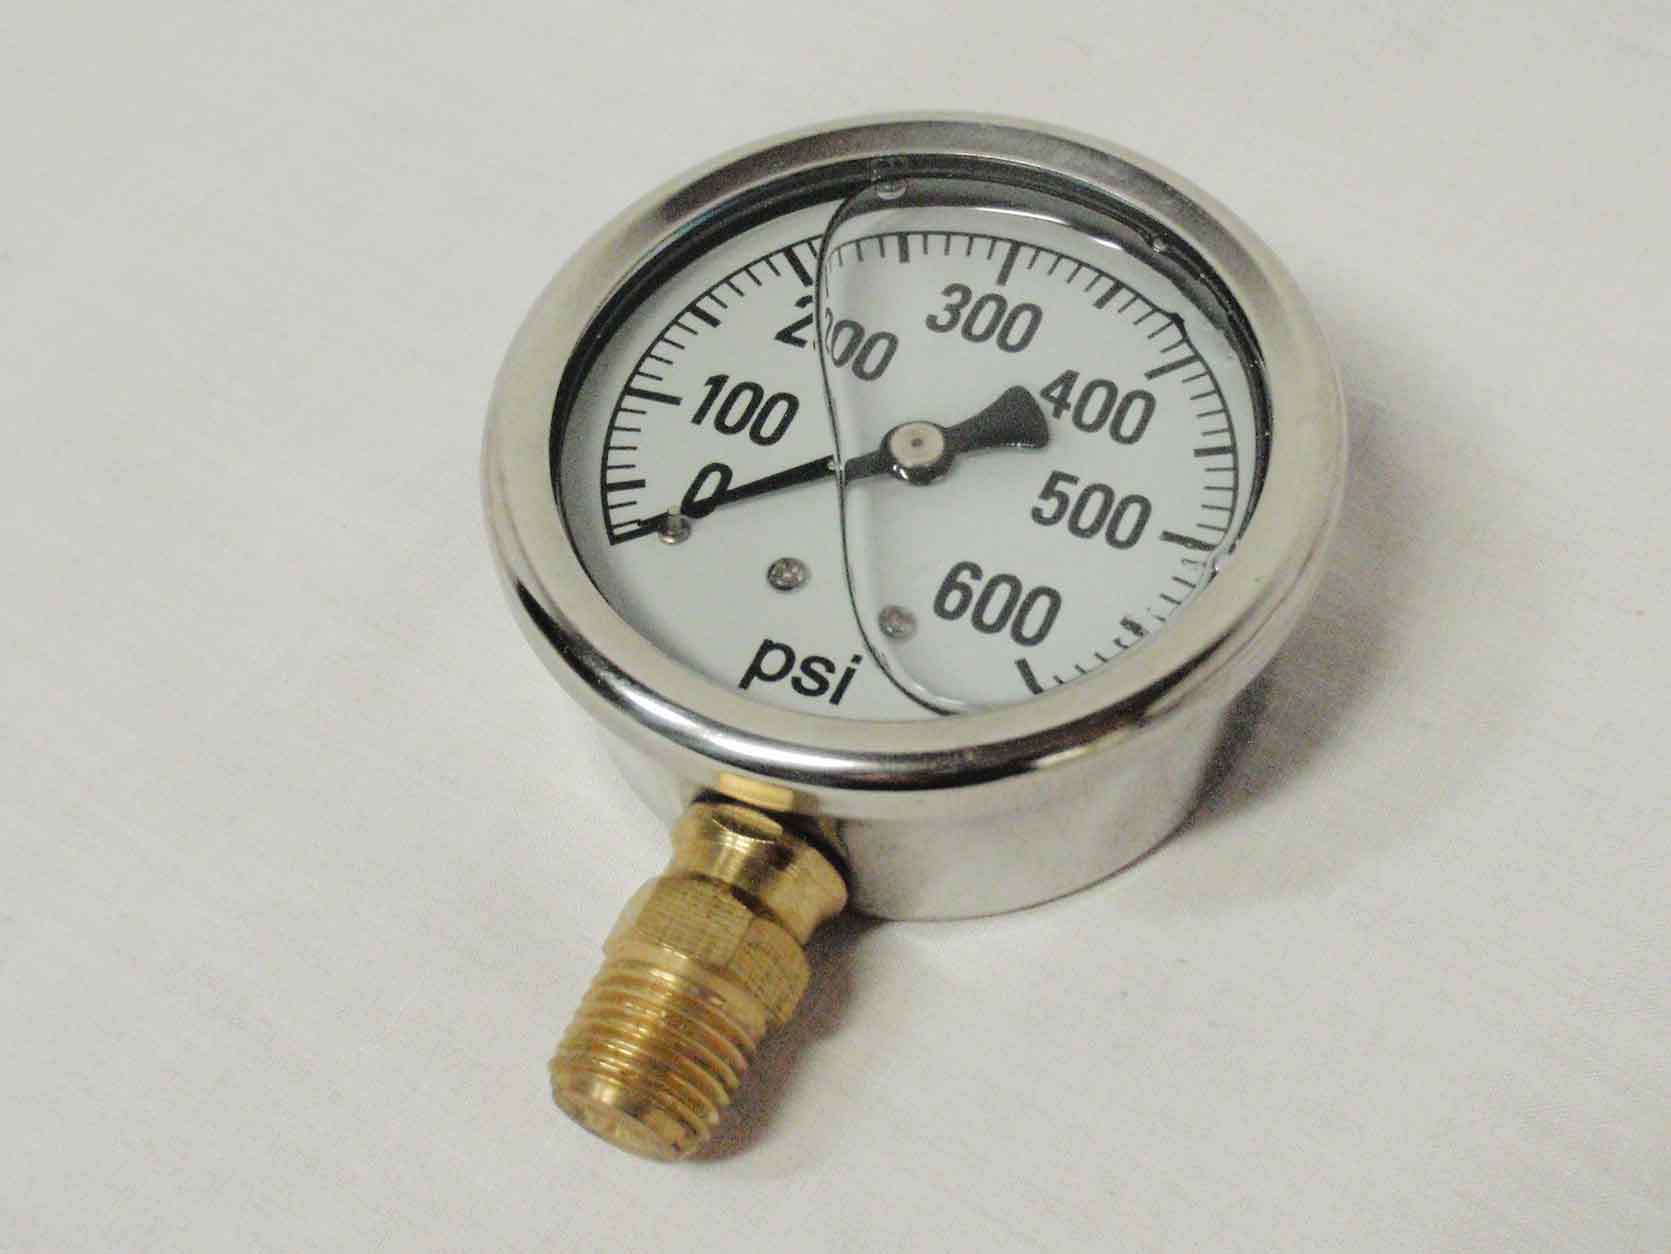 #31500 Pressure gauge (0-600 psi)